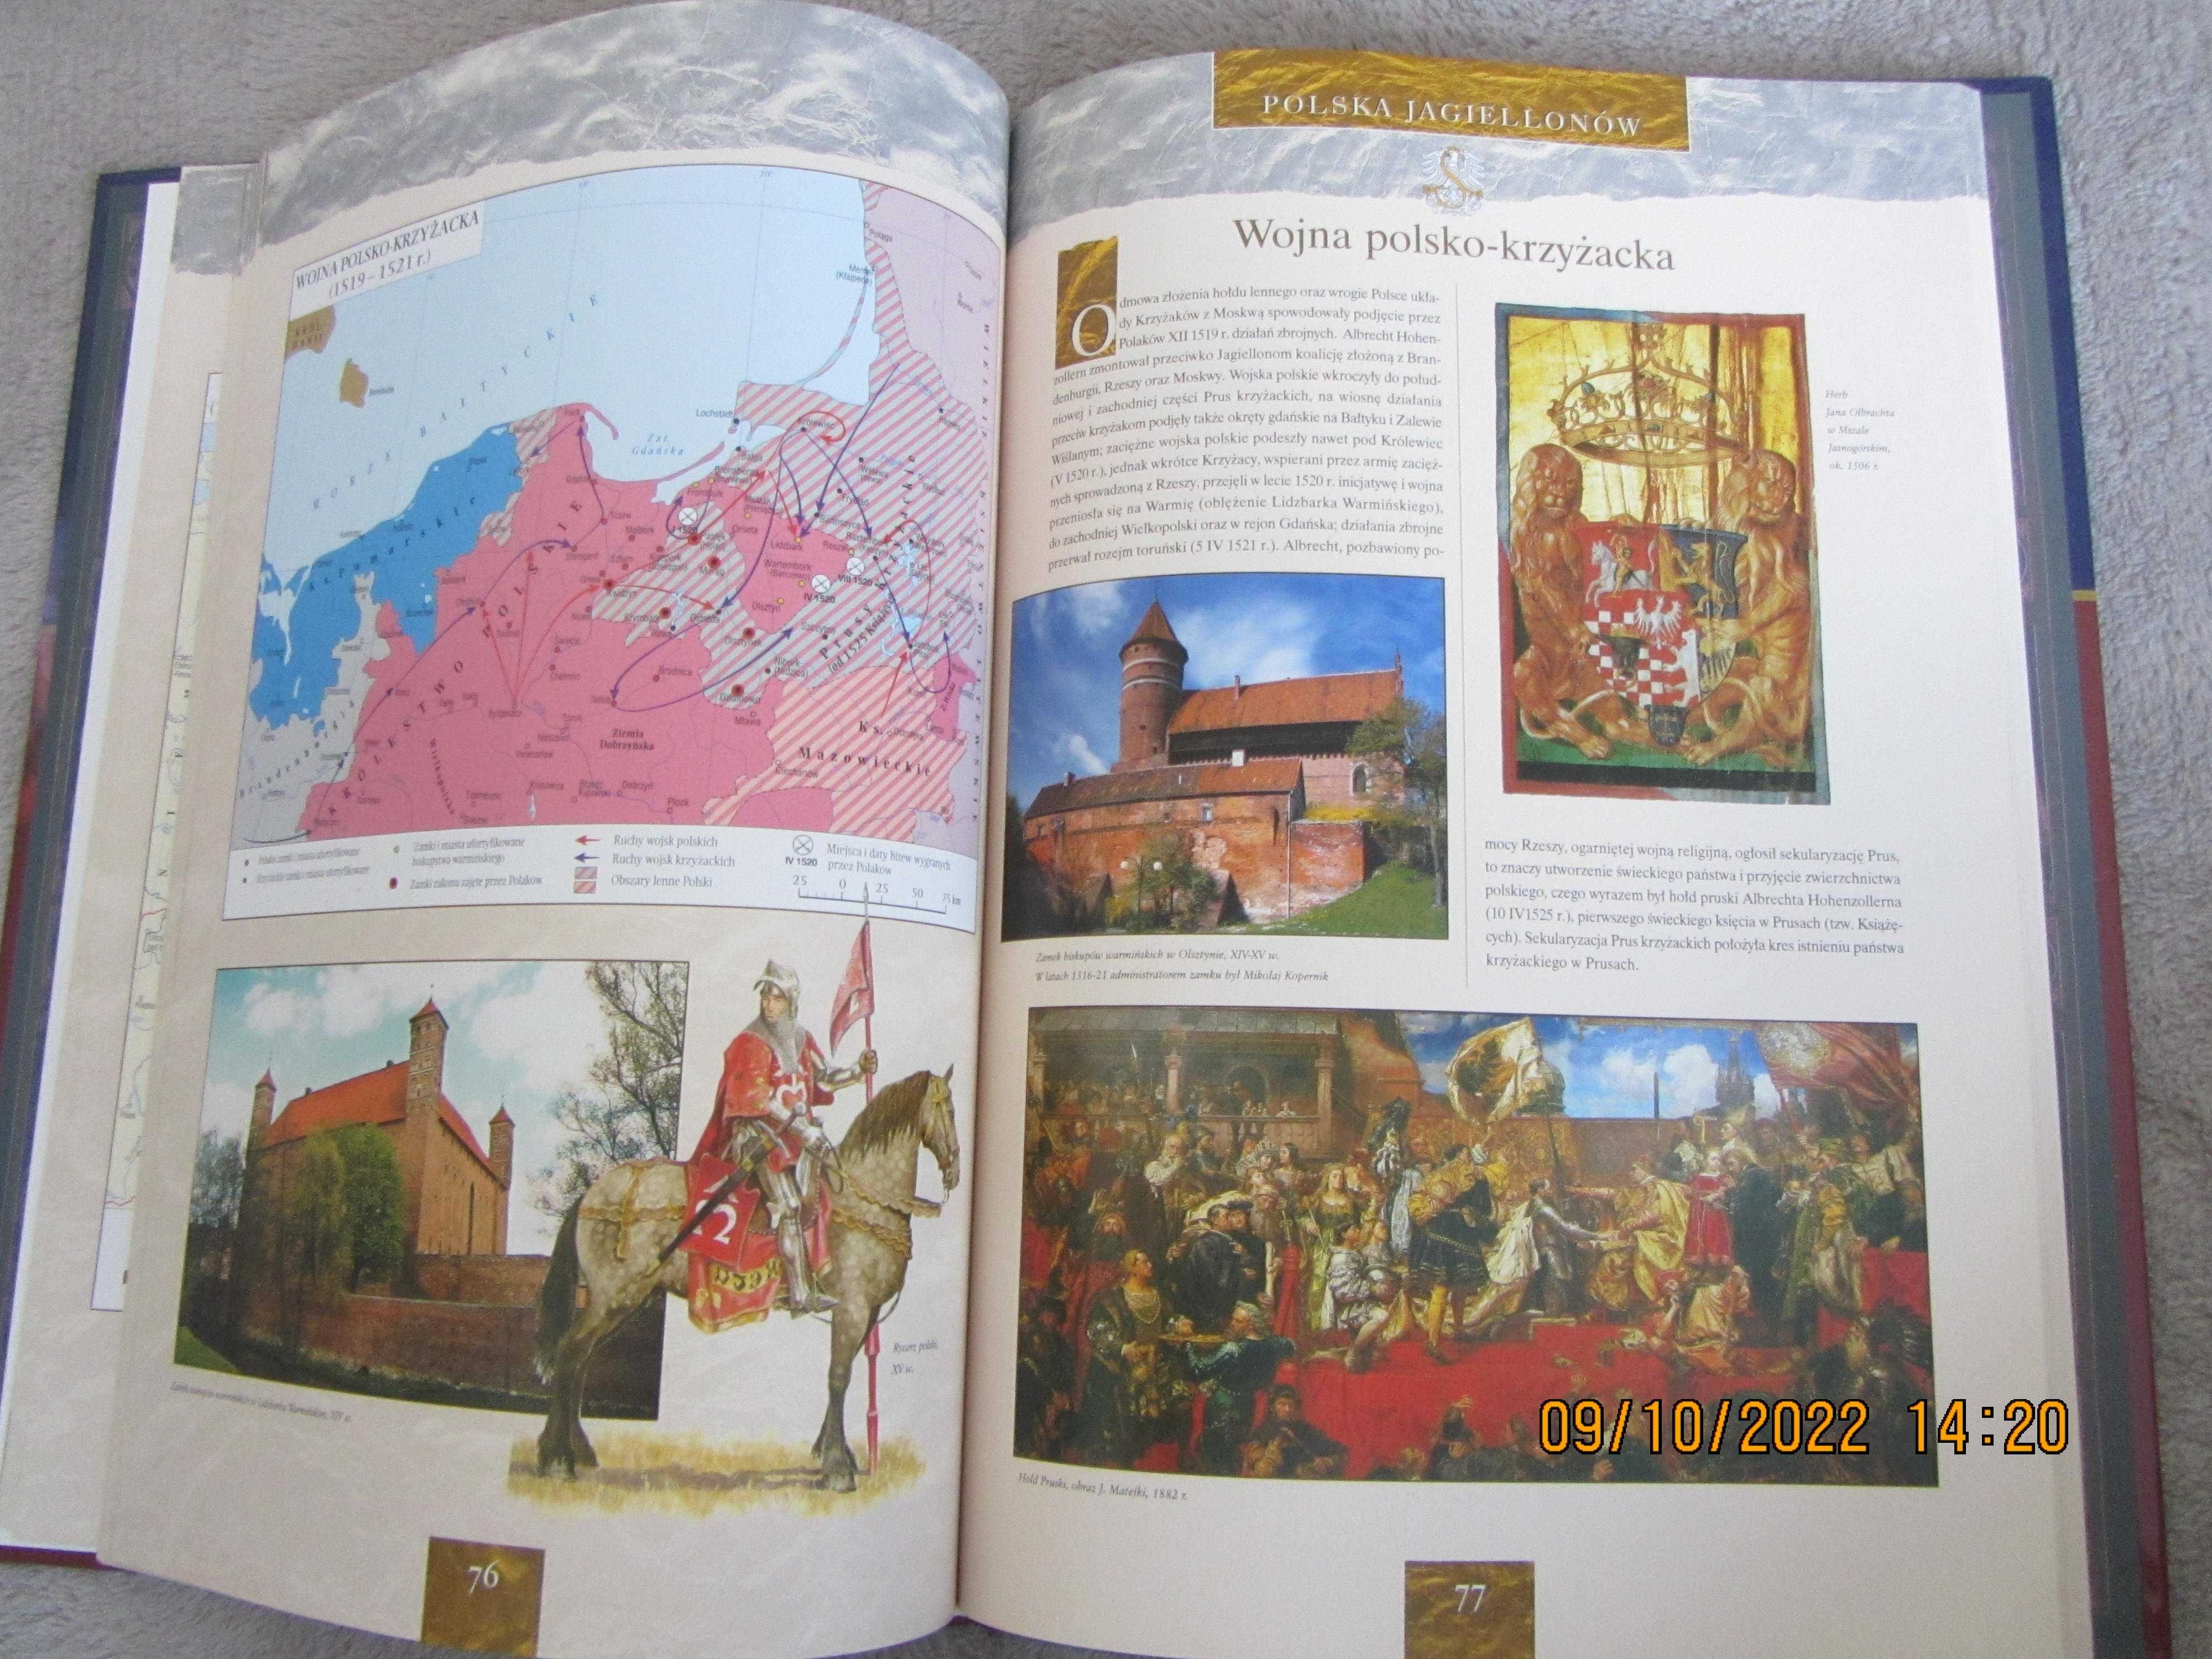 Ilustrowany Atlas Historii Polski Tom 1